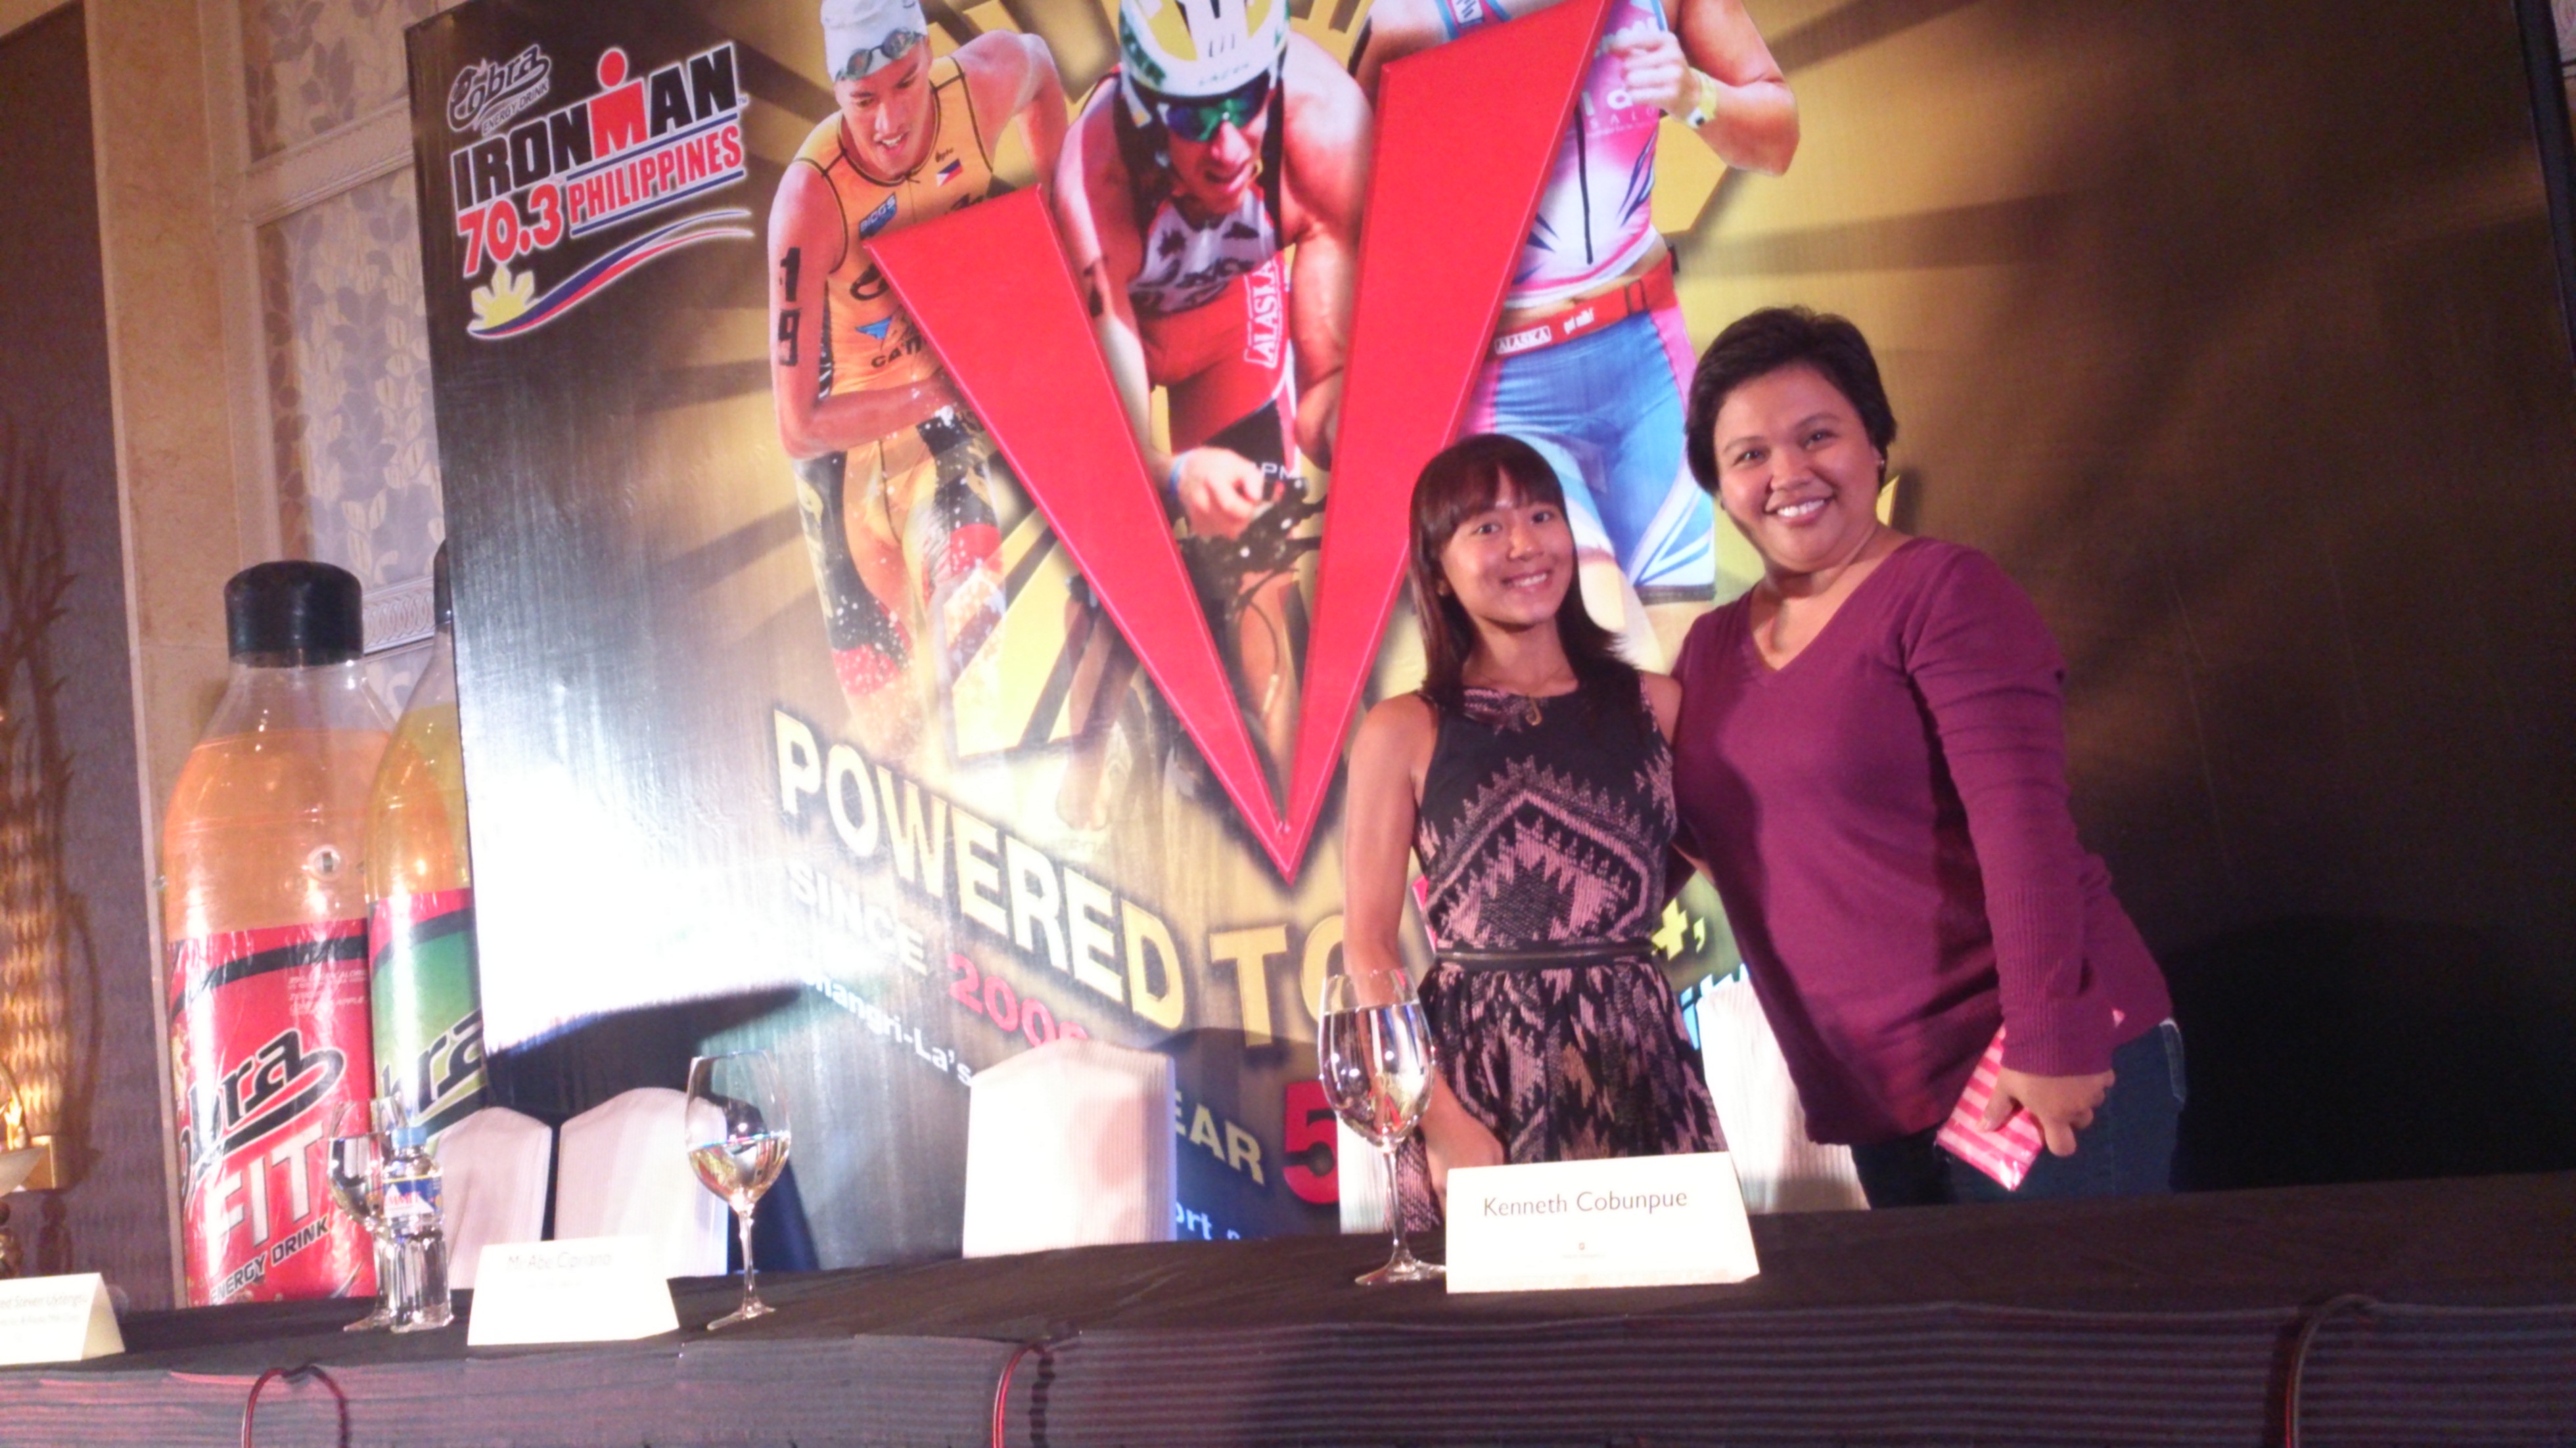 2013 Cobra Ironman Philippines - Joyette Jopson